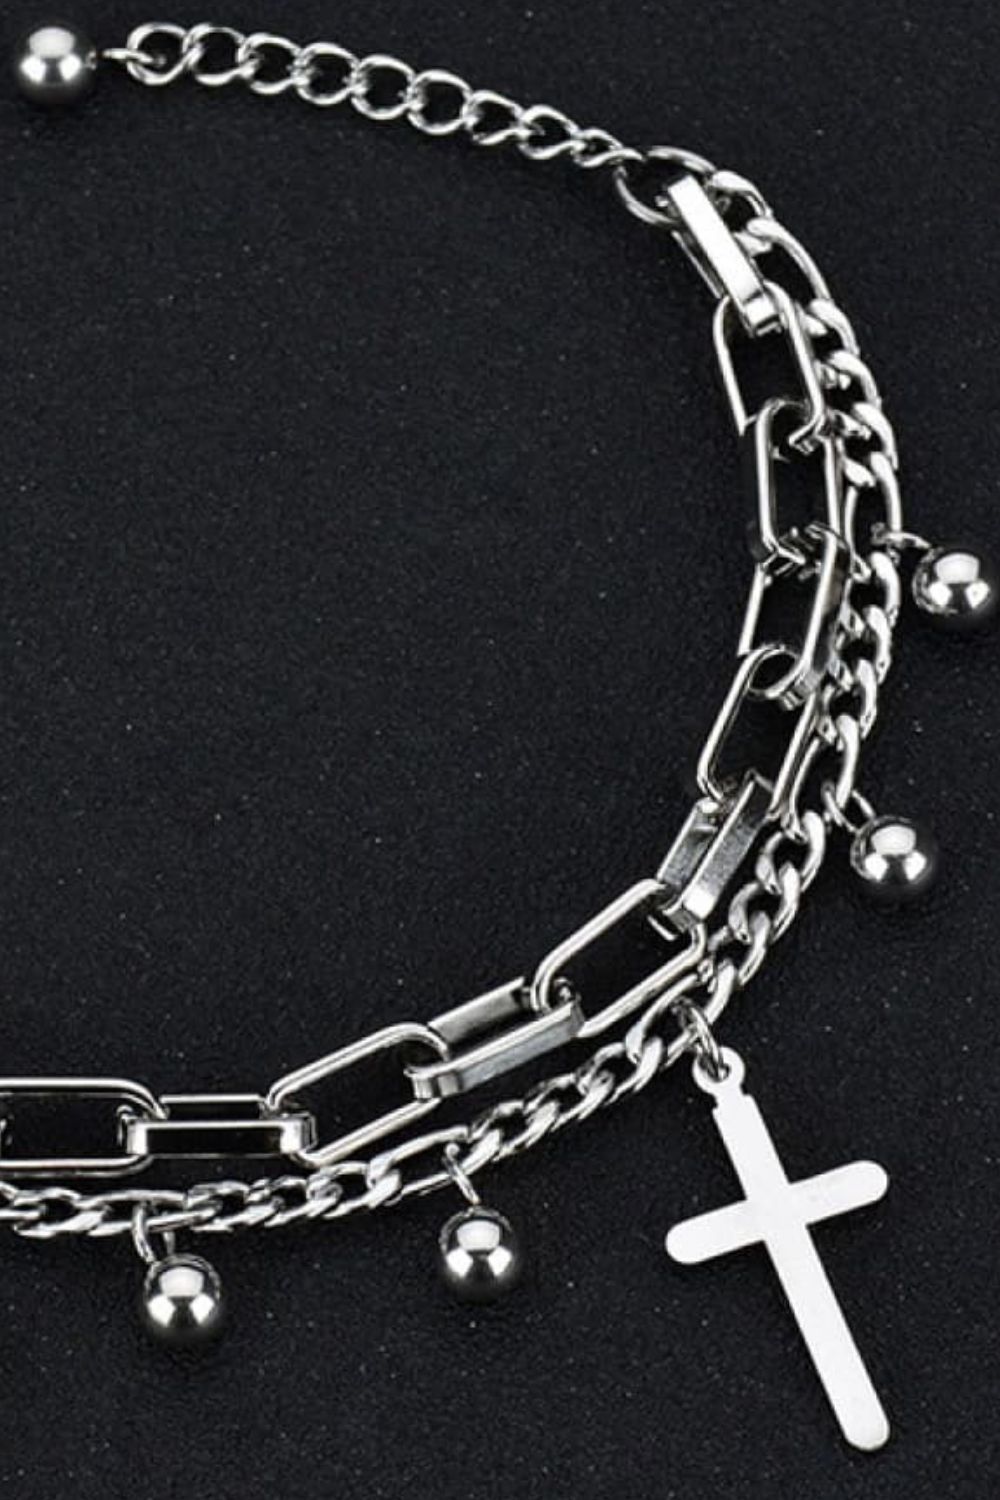 HK Cross Layered Stainless Steel Bracelet